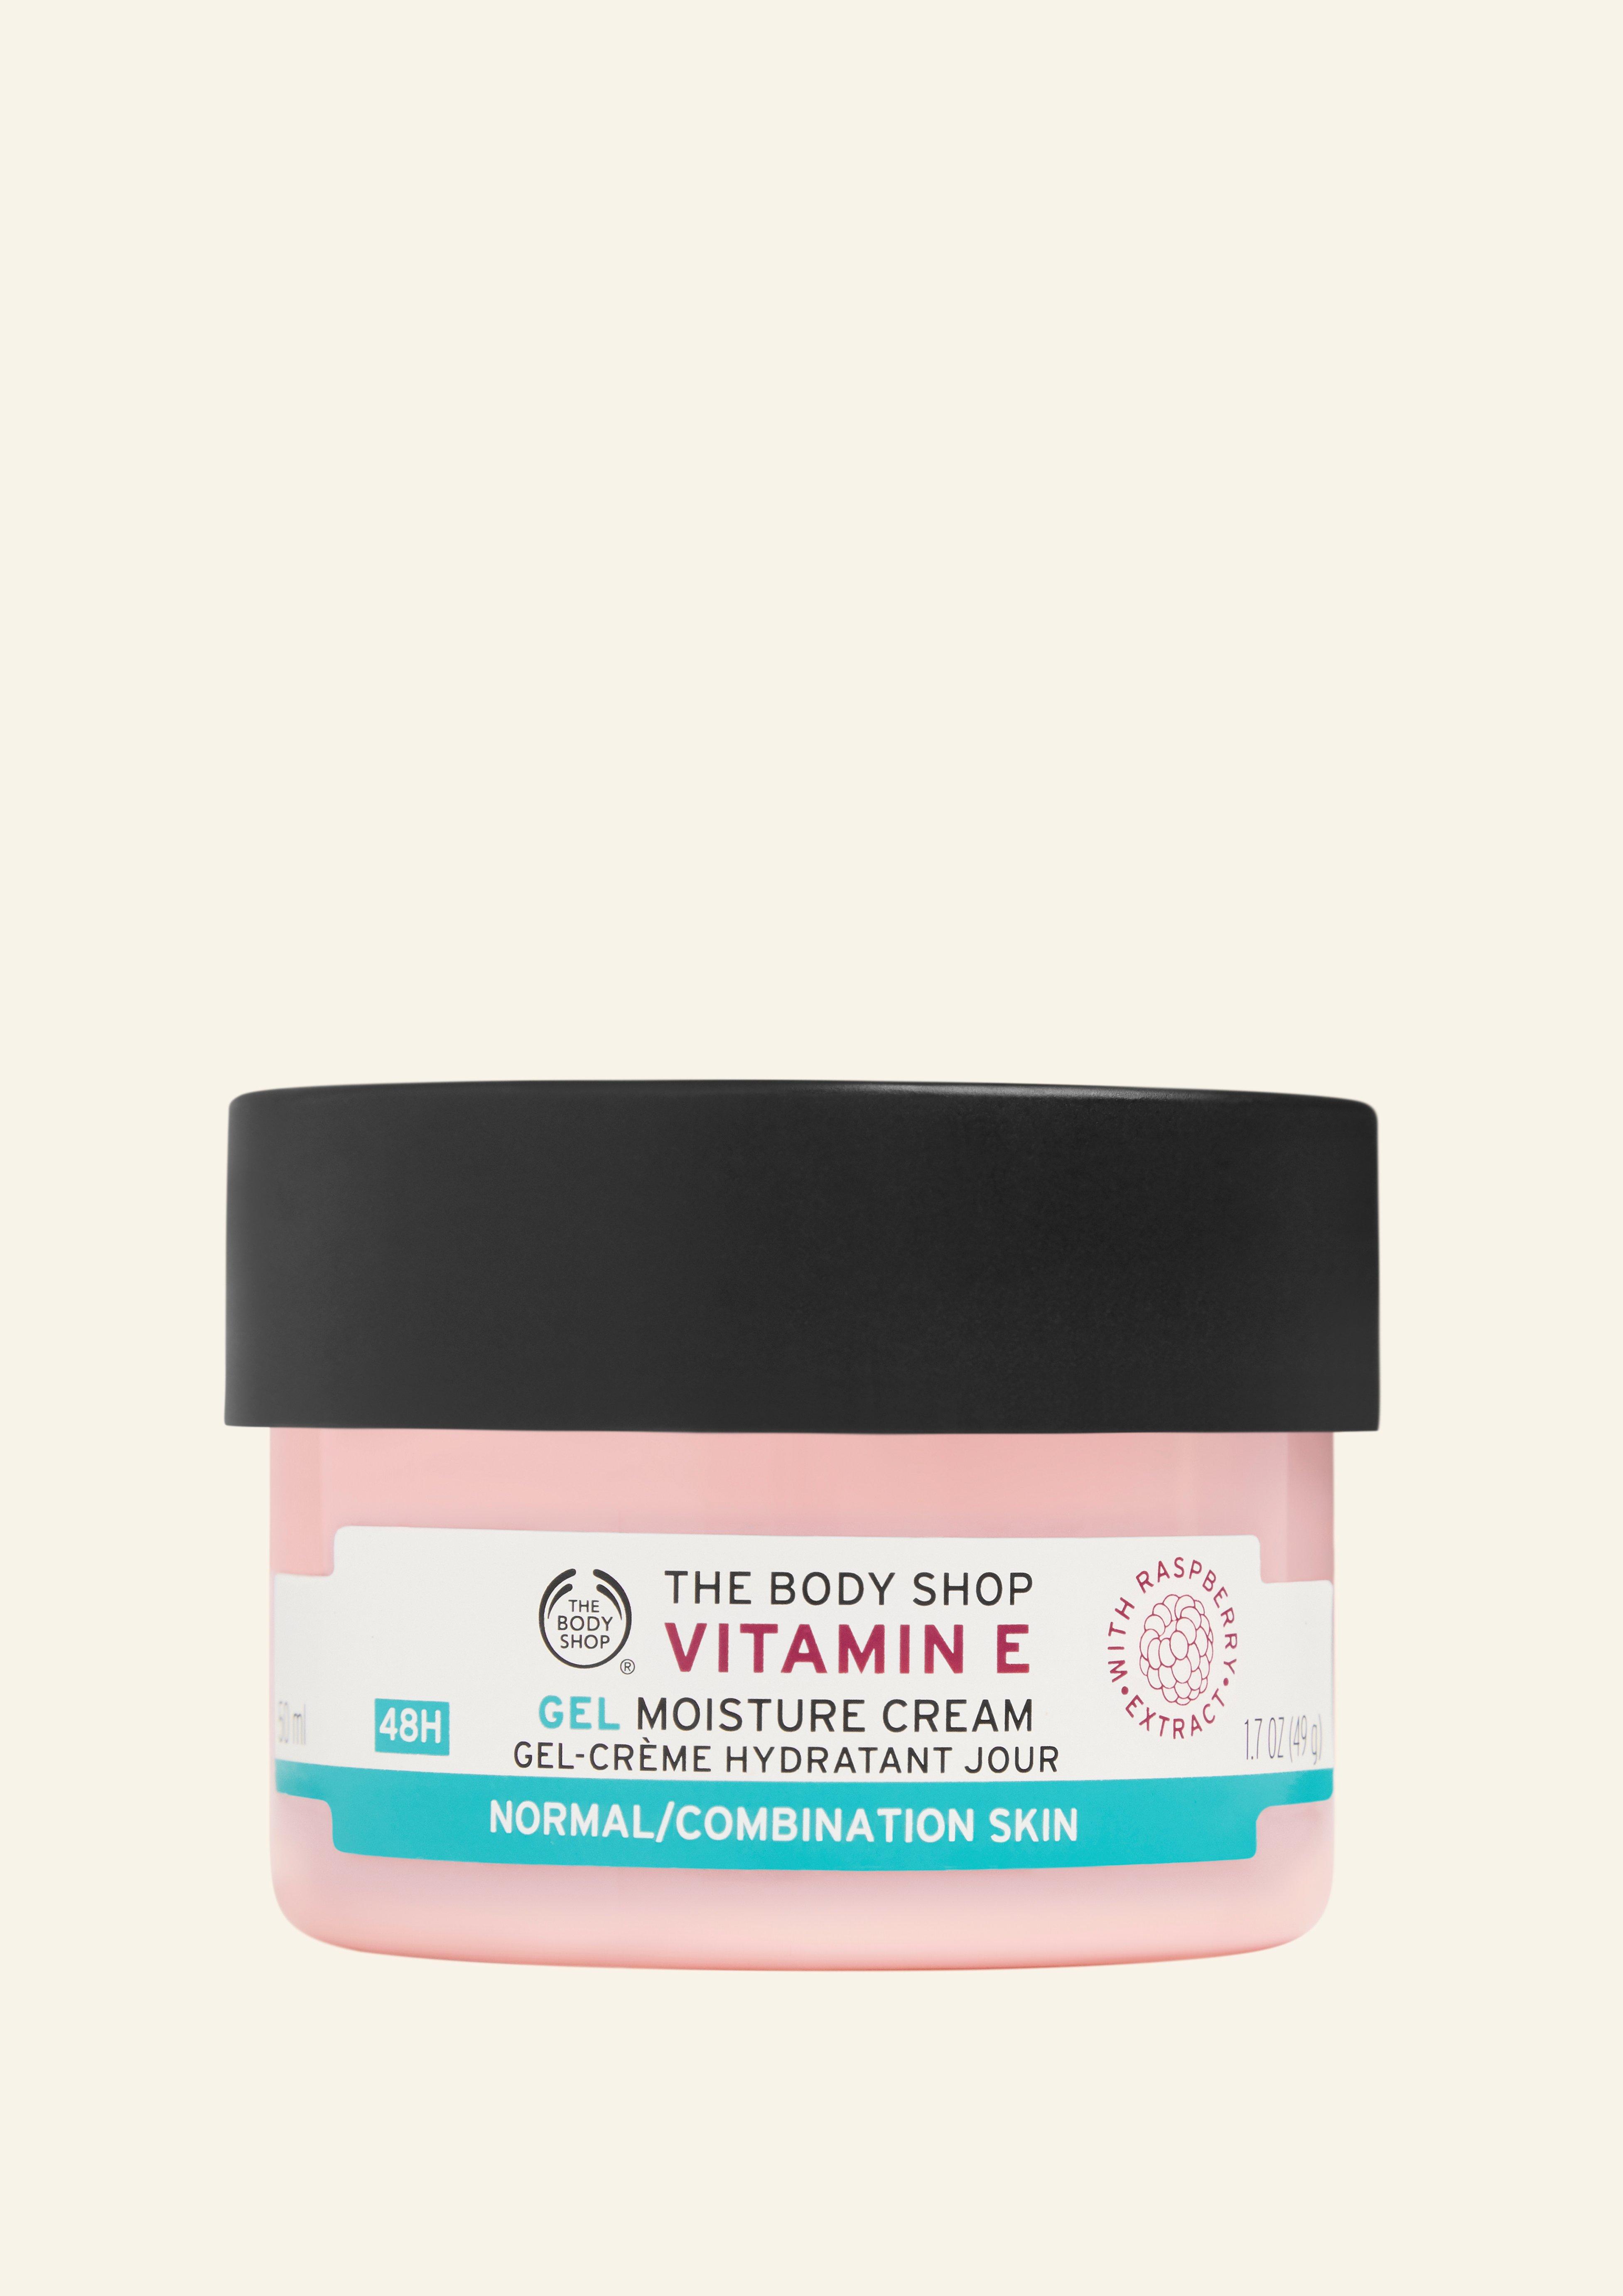 Vitamin E Gel Moisture Cream Face The Body Shop